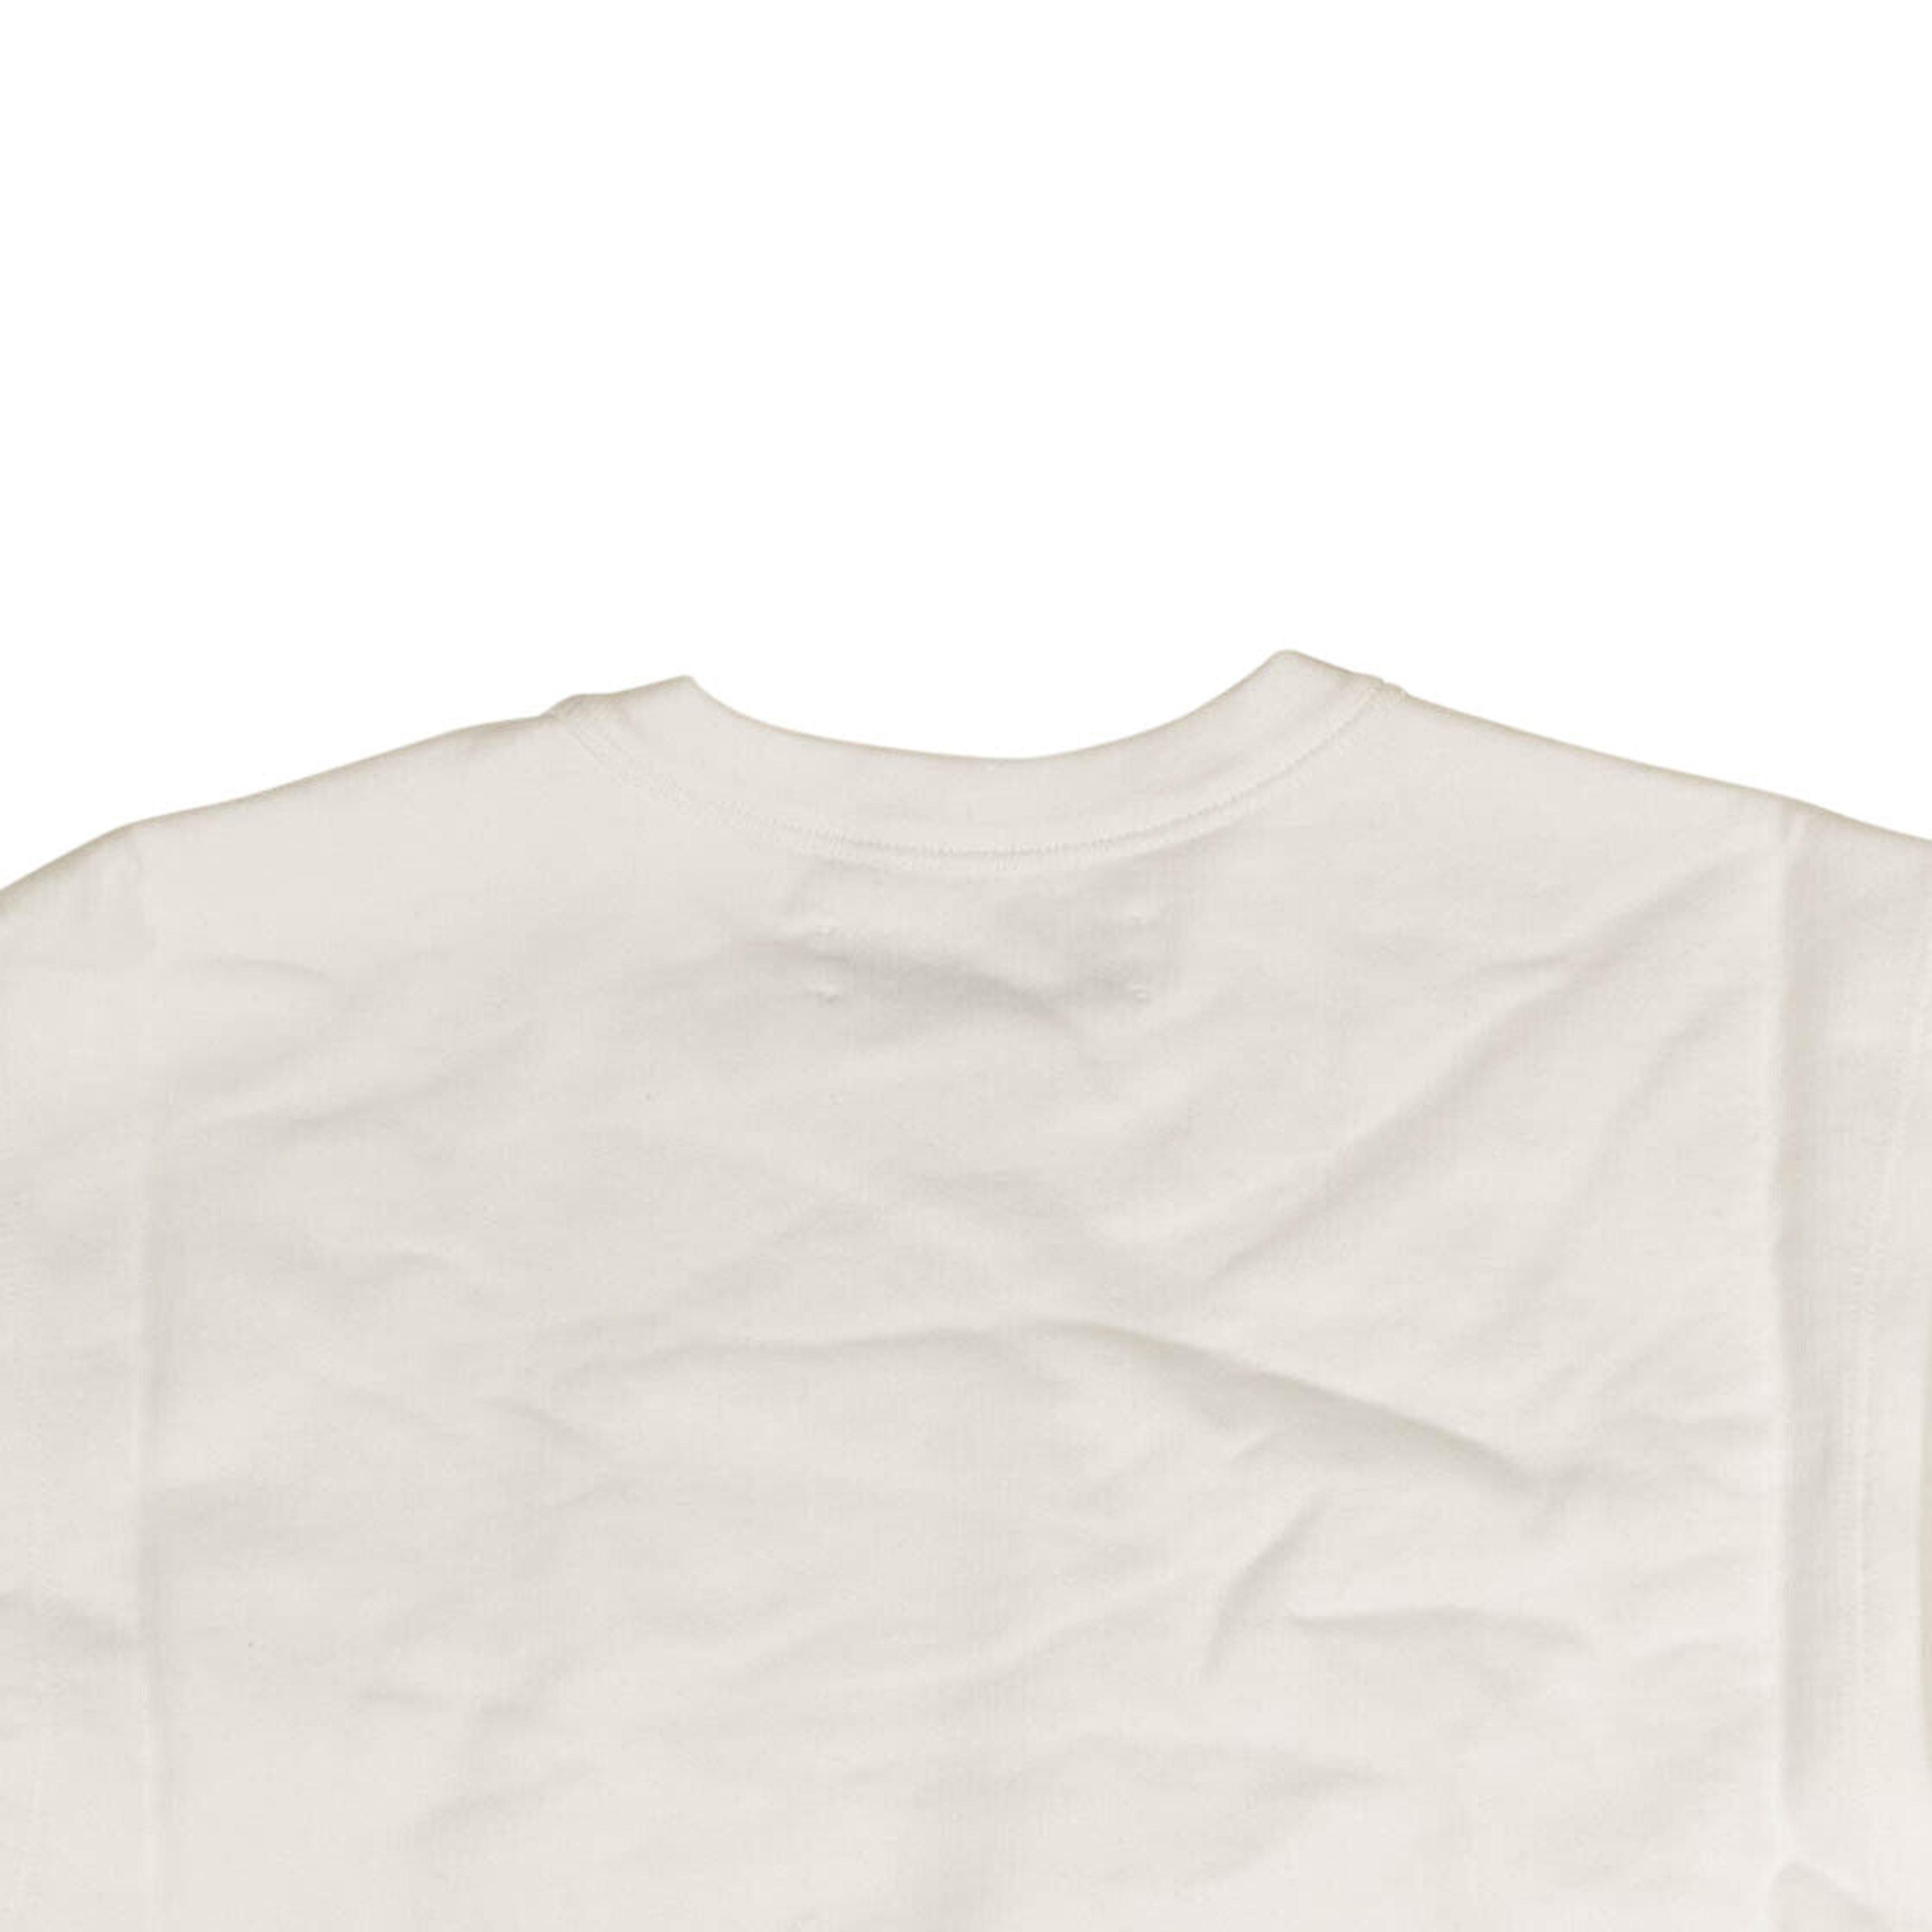 Alternate View 3 of White Crewneck Sleeveless Sweatshirt Vest